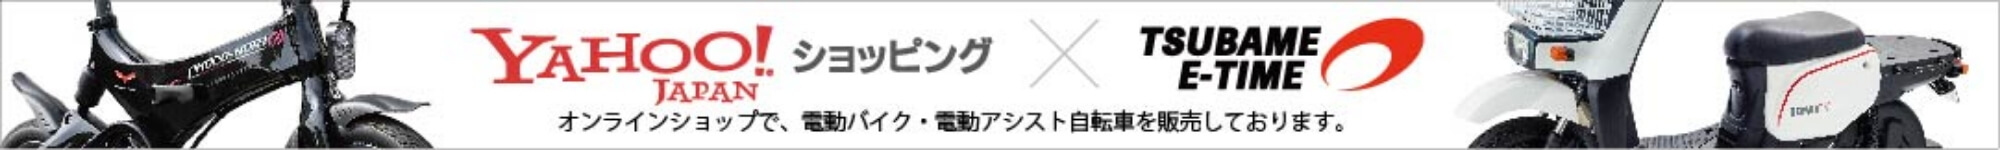 Yahoo!Japan ショッピング × ツバメイータイムズ